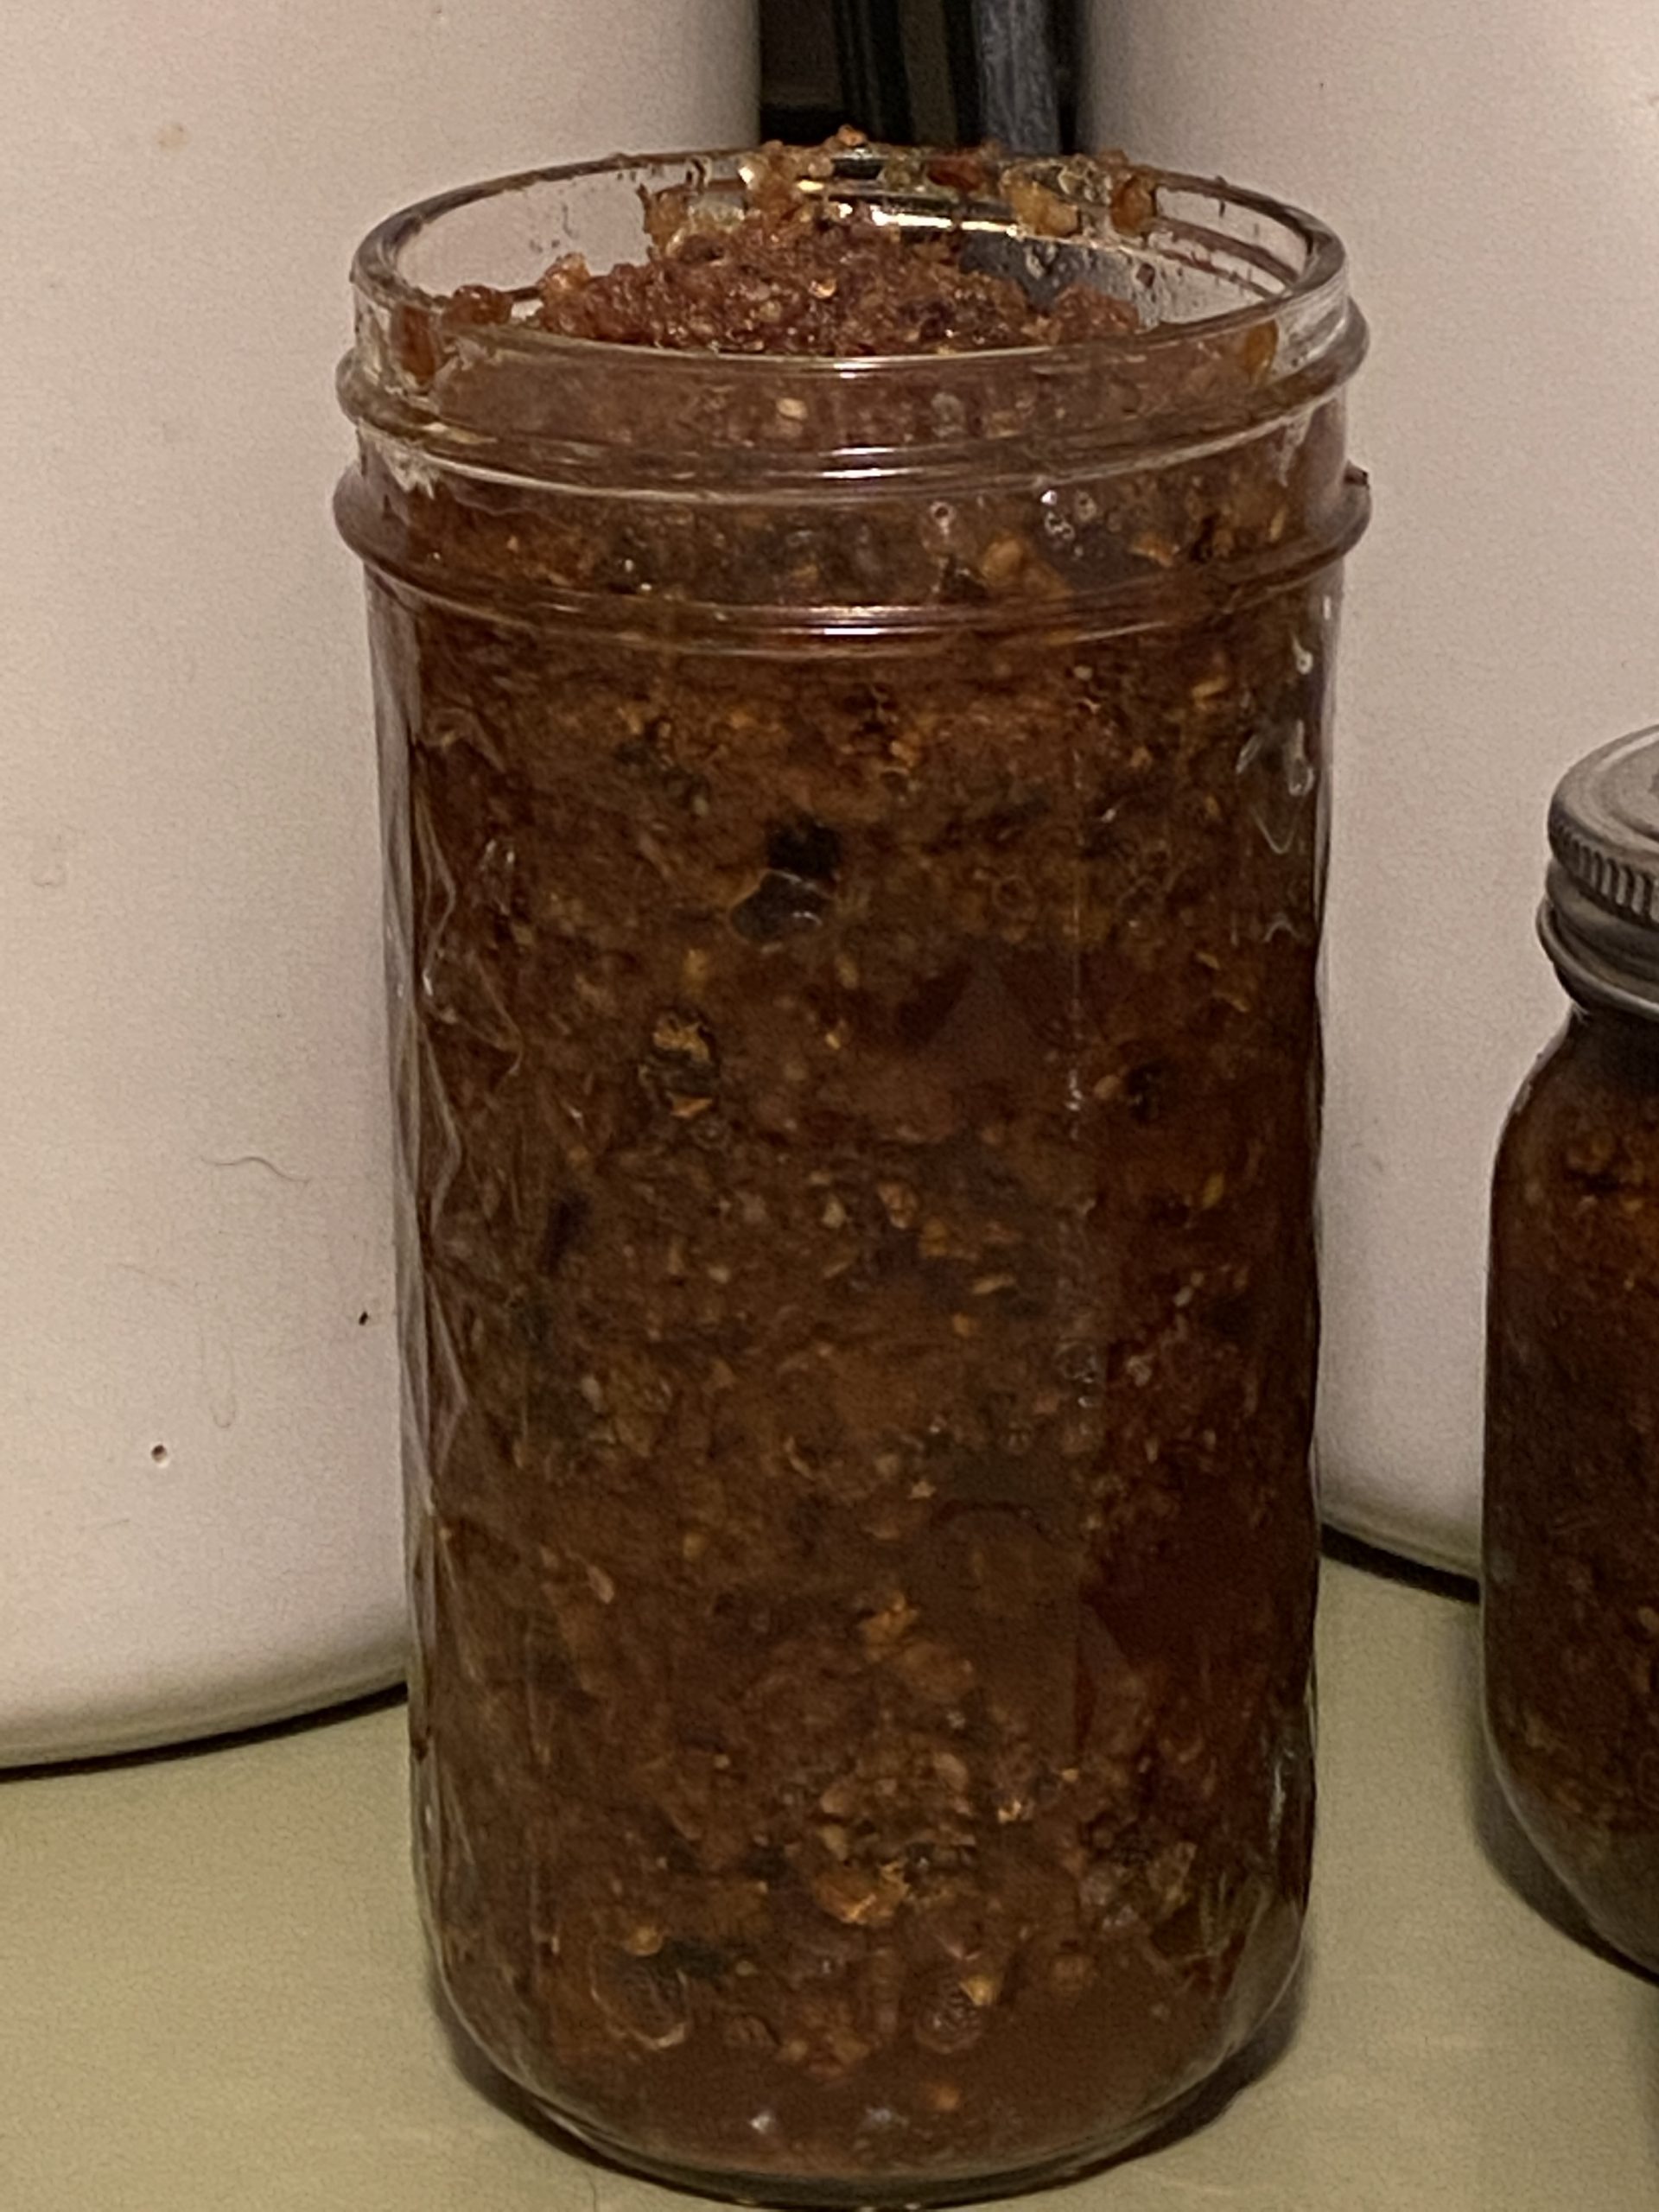 Big Jar of Salsa Macha